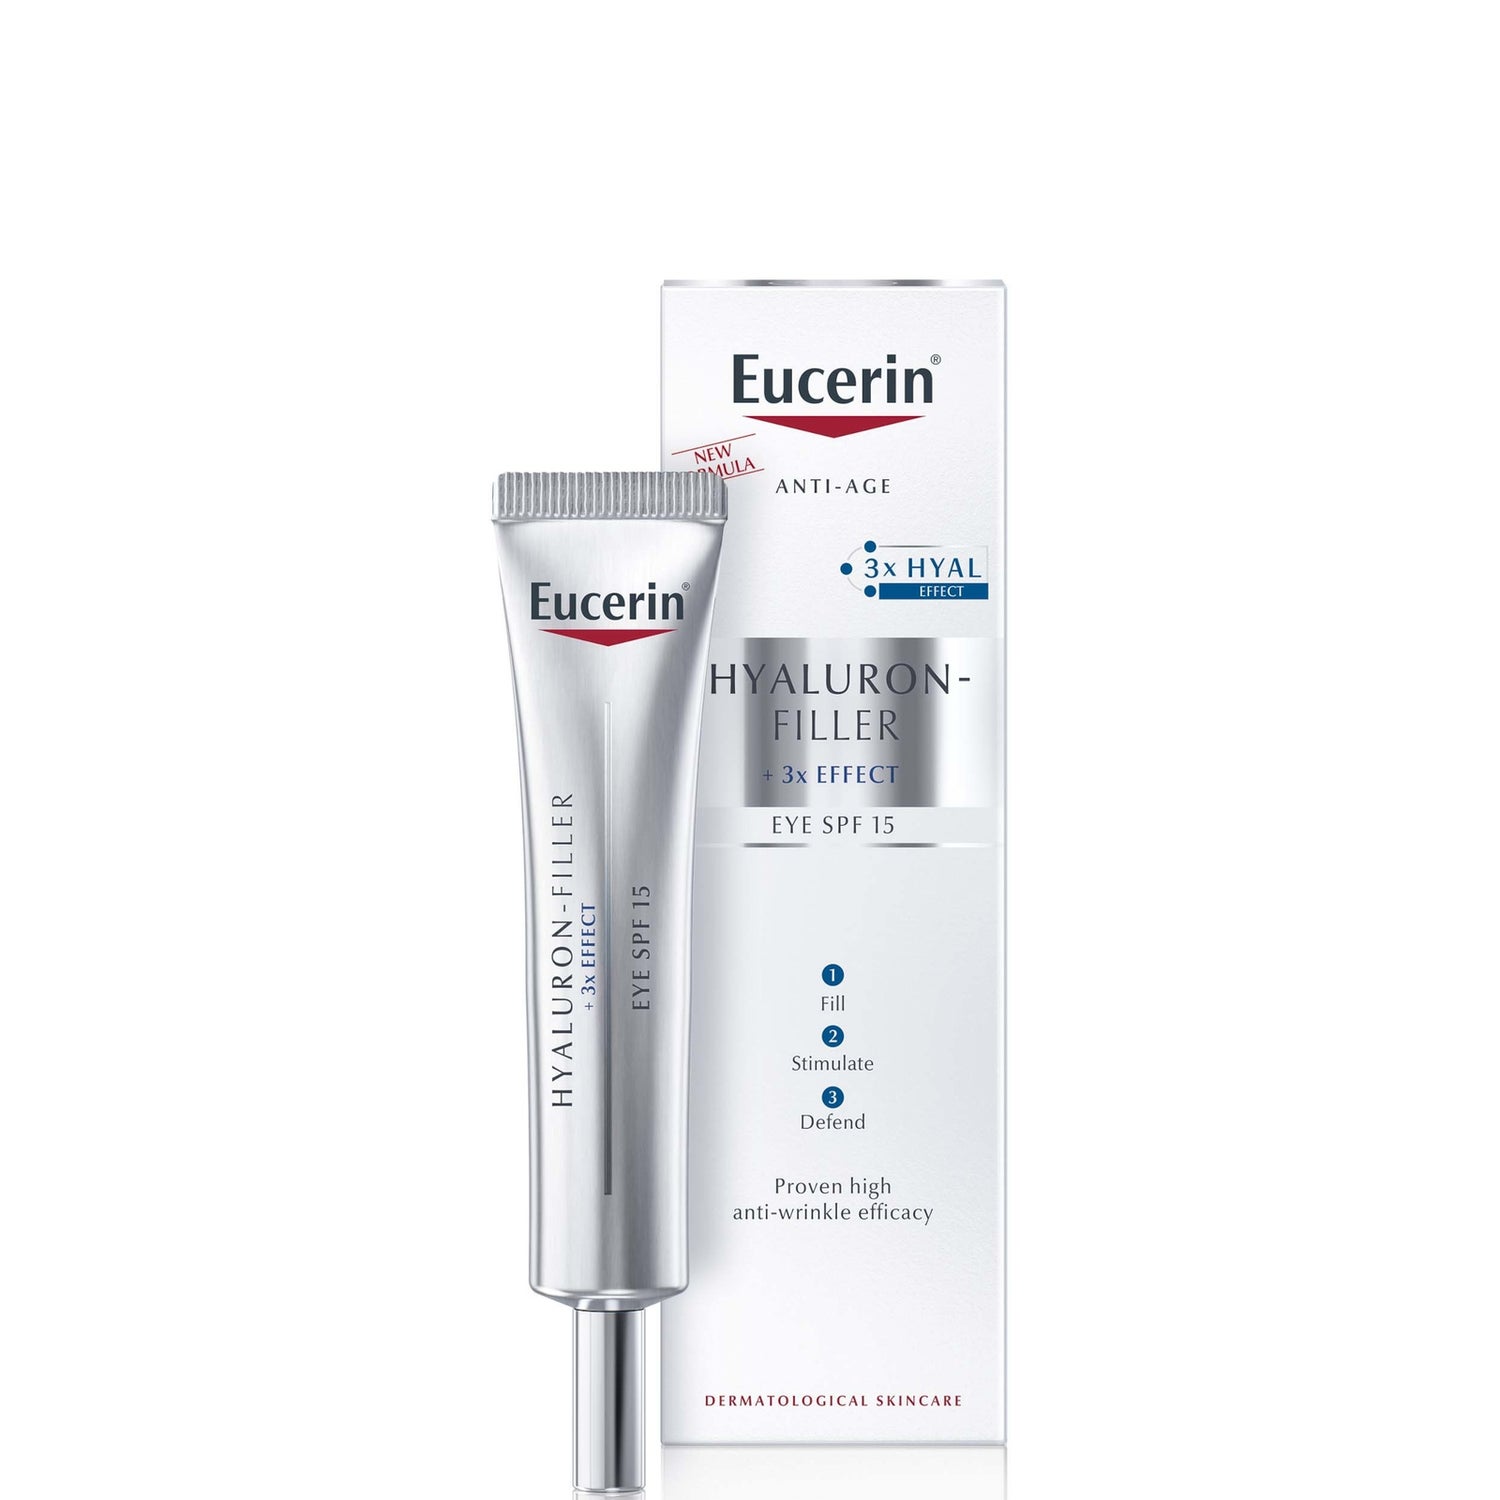 Eucerin® crème yeux acide hyaluronique anti-âge SPF 15 + protection UVA (15ml)